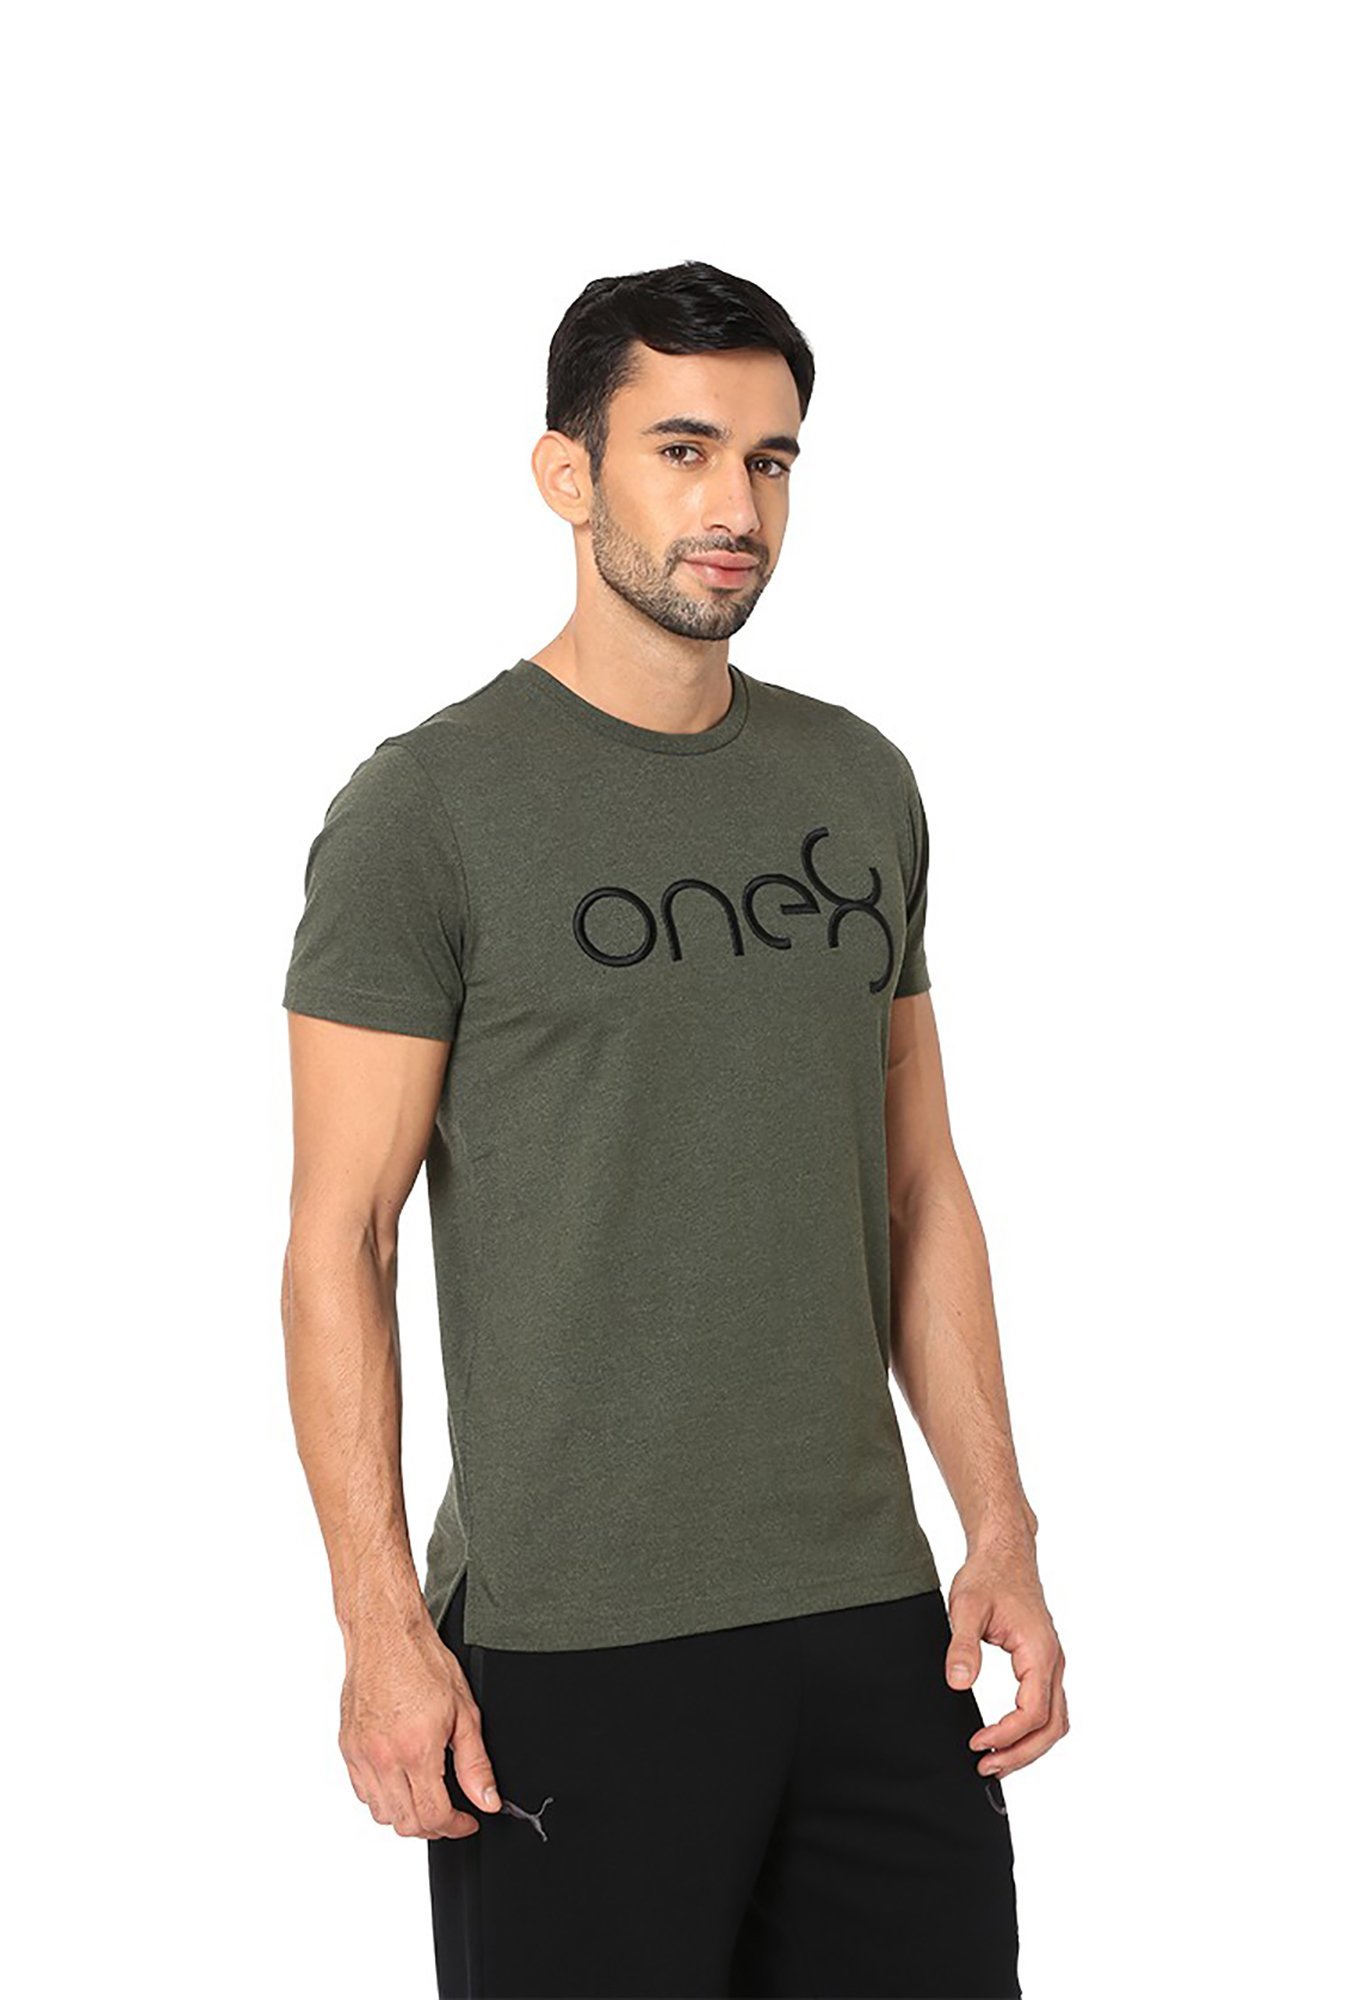 one8 puma t shirt